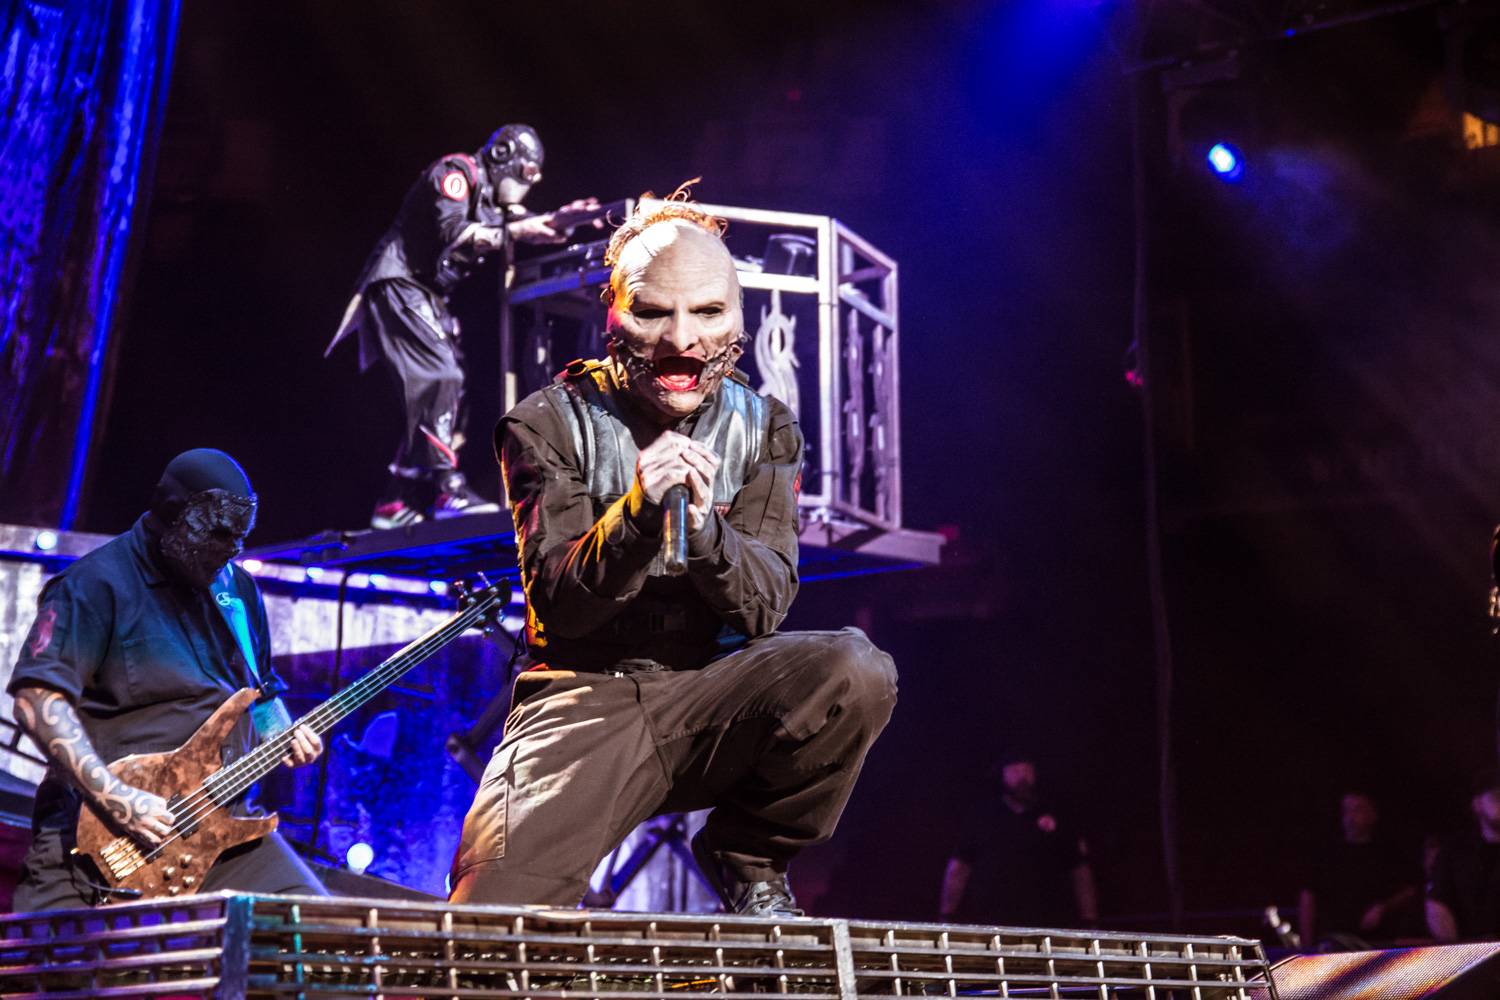 Slipknot at Rogers Arena, Vancouver, Aug 24 2015. Pavel Boiko photo.